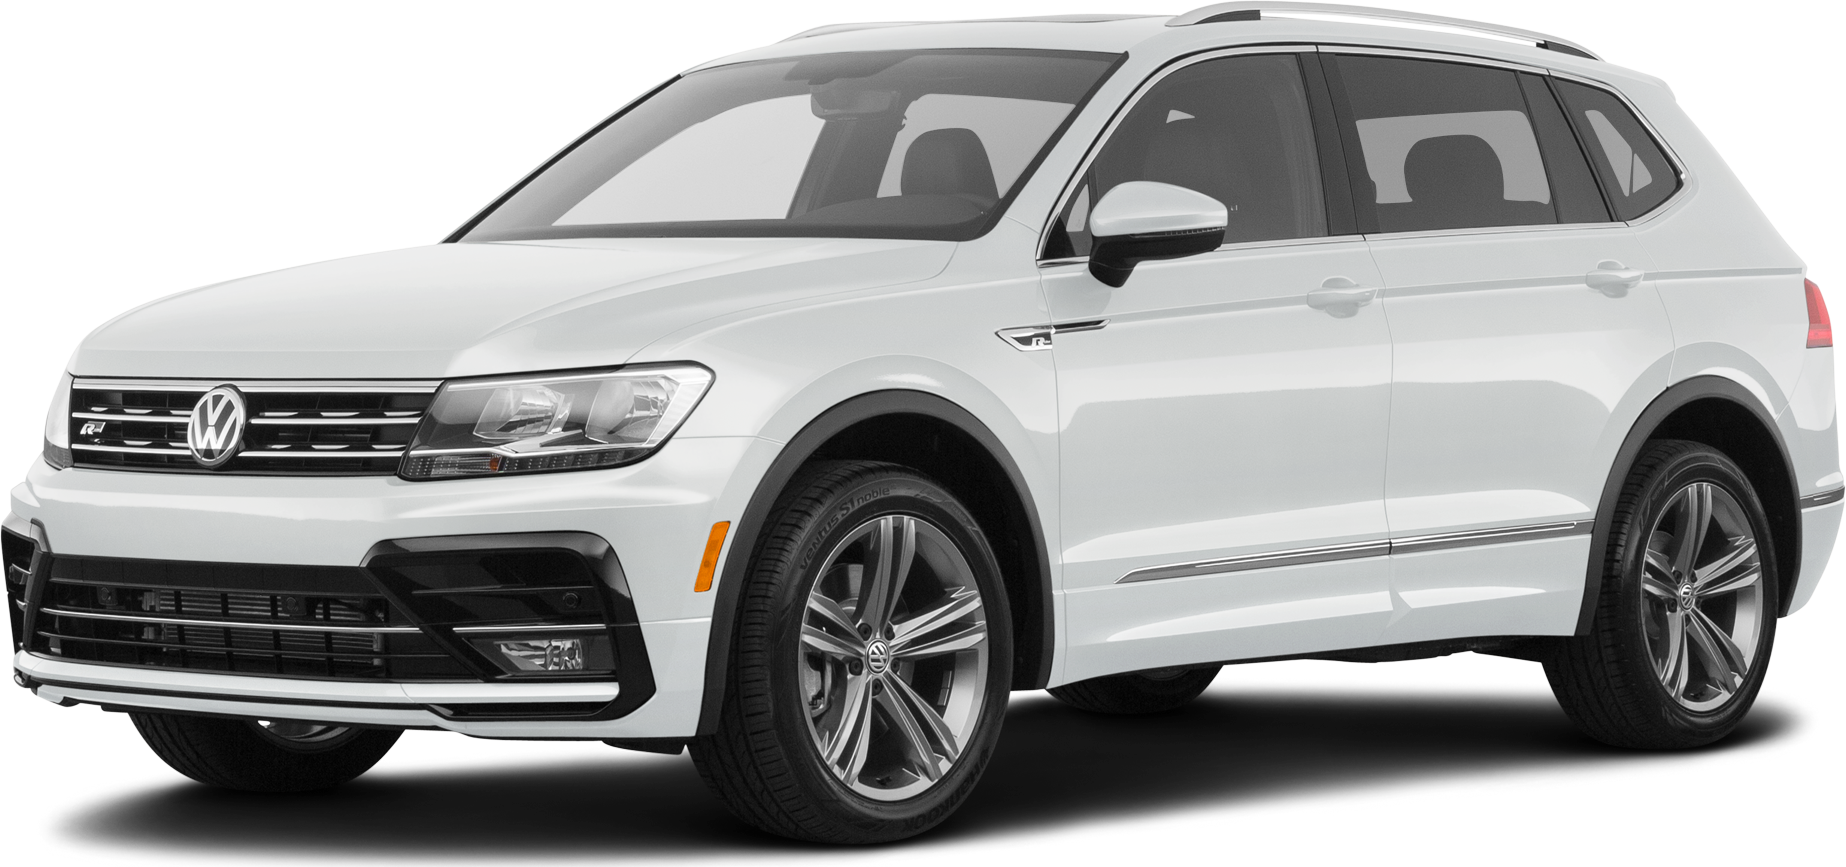 2019 Volkswagen Tiguan Price, Value, Ratings & Reviews